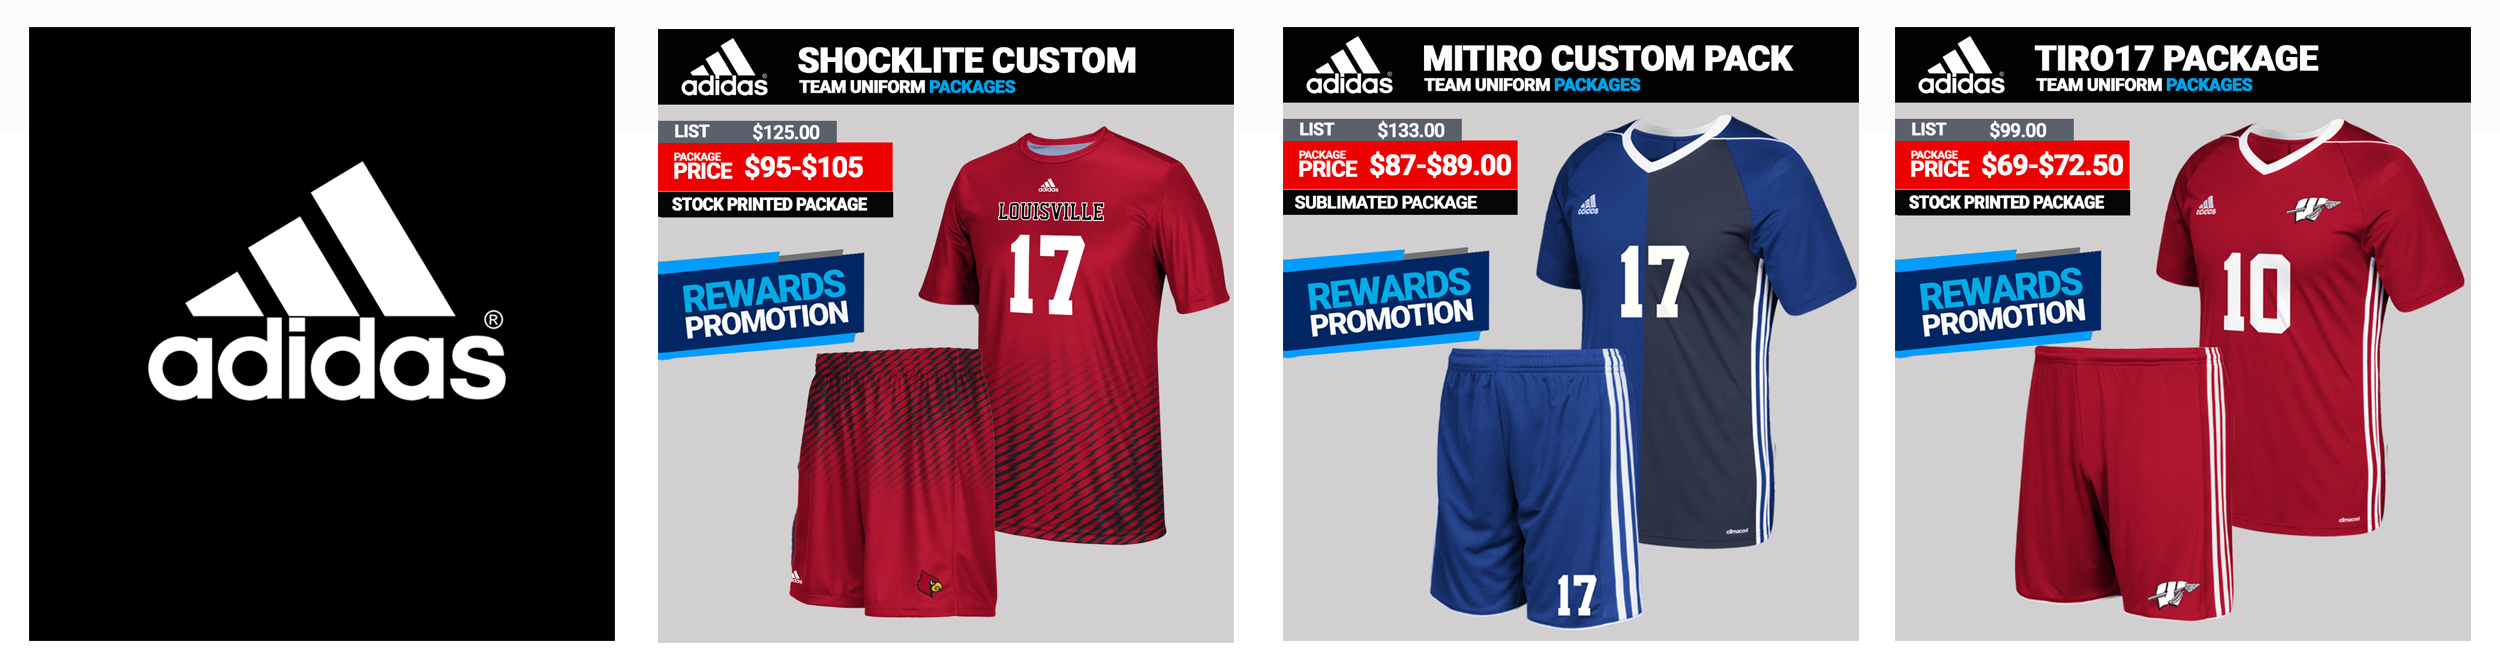 Adidas Team Soccer Uniform Packages